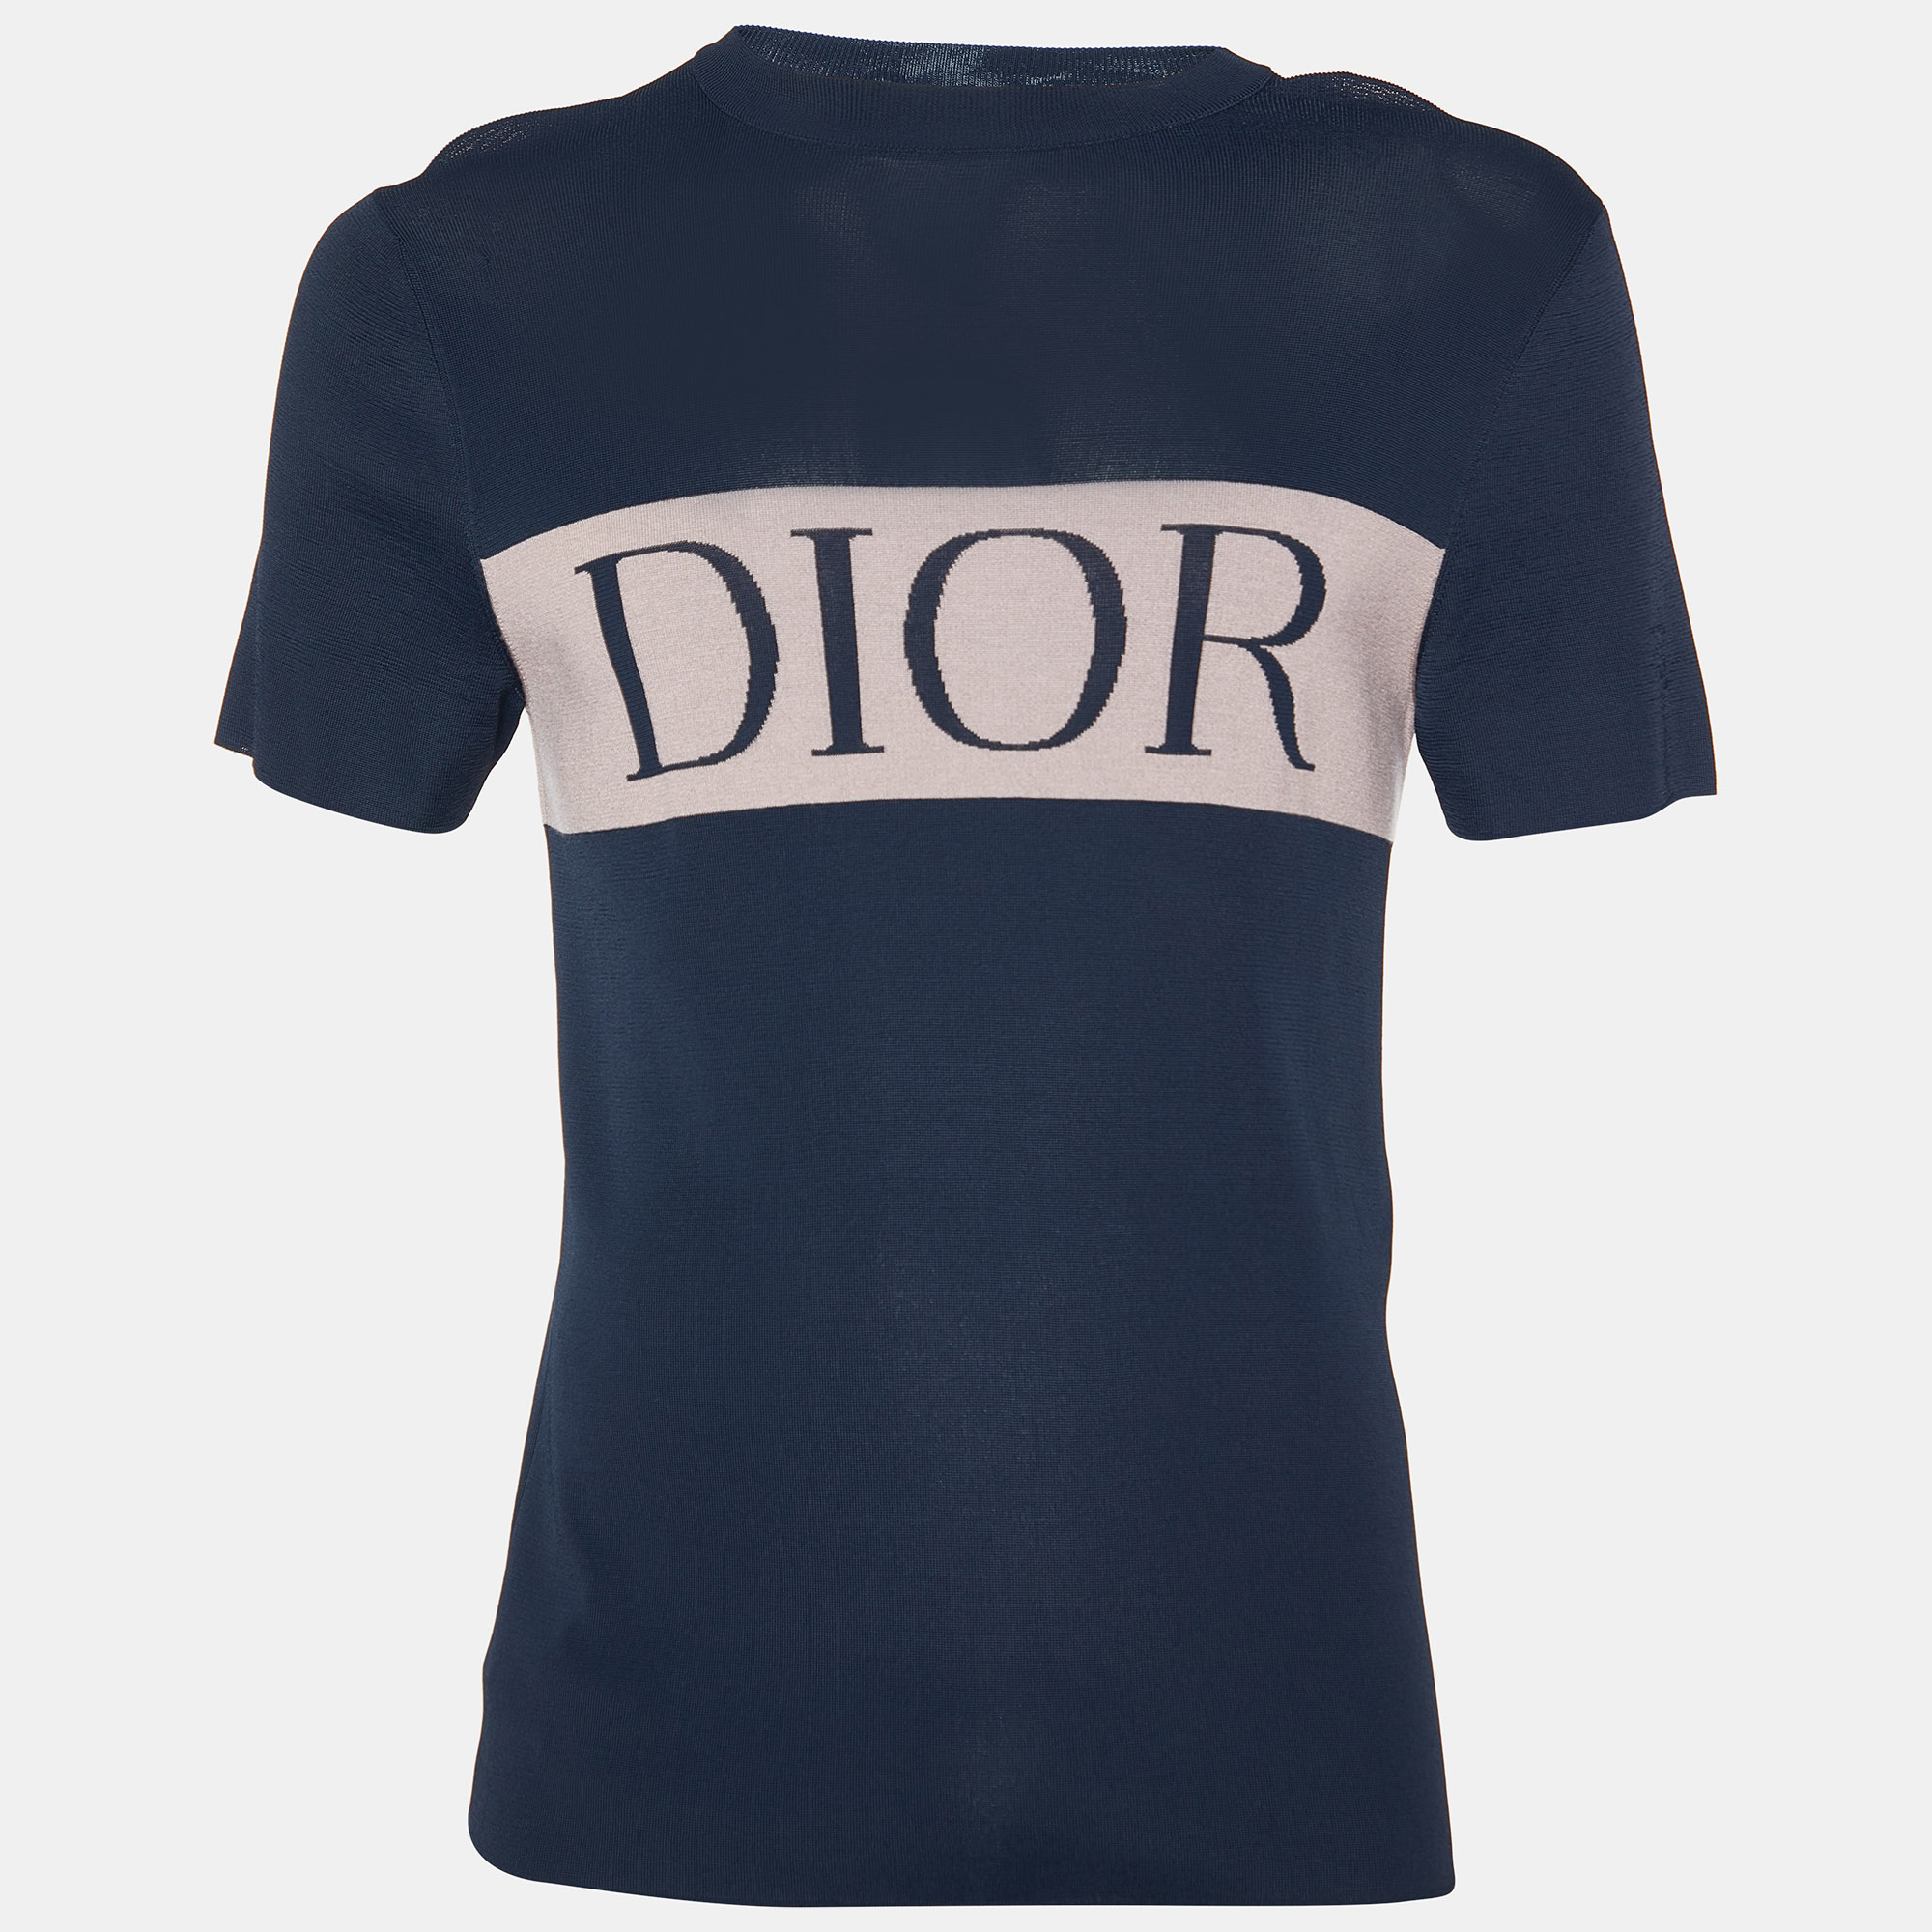 Dior homme midnight blue/pink logo knit crew neck t-shirt s